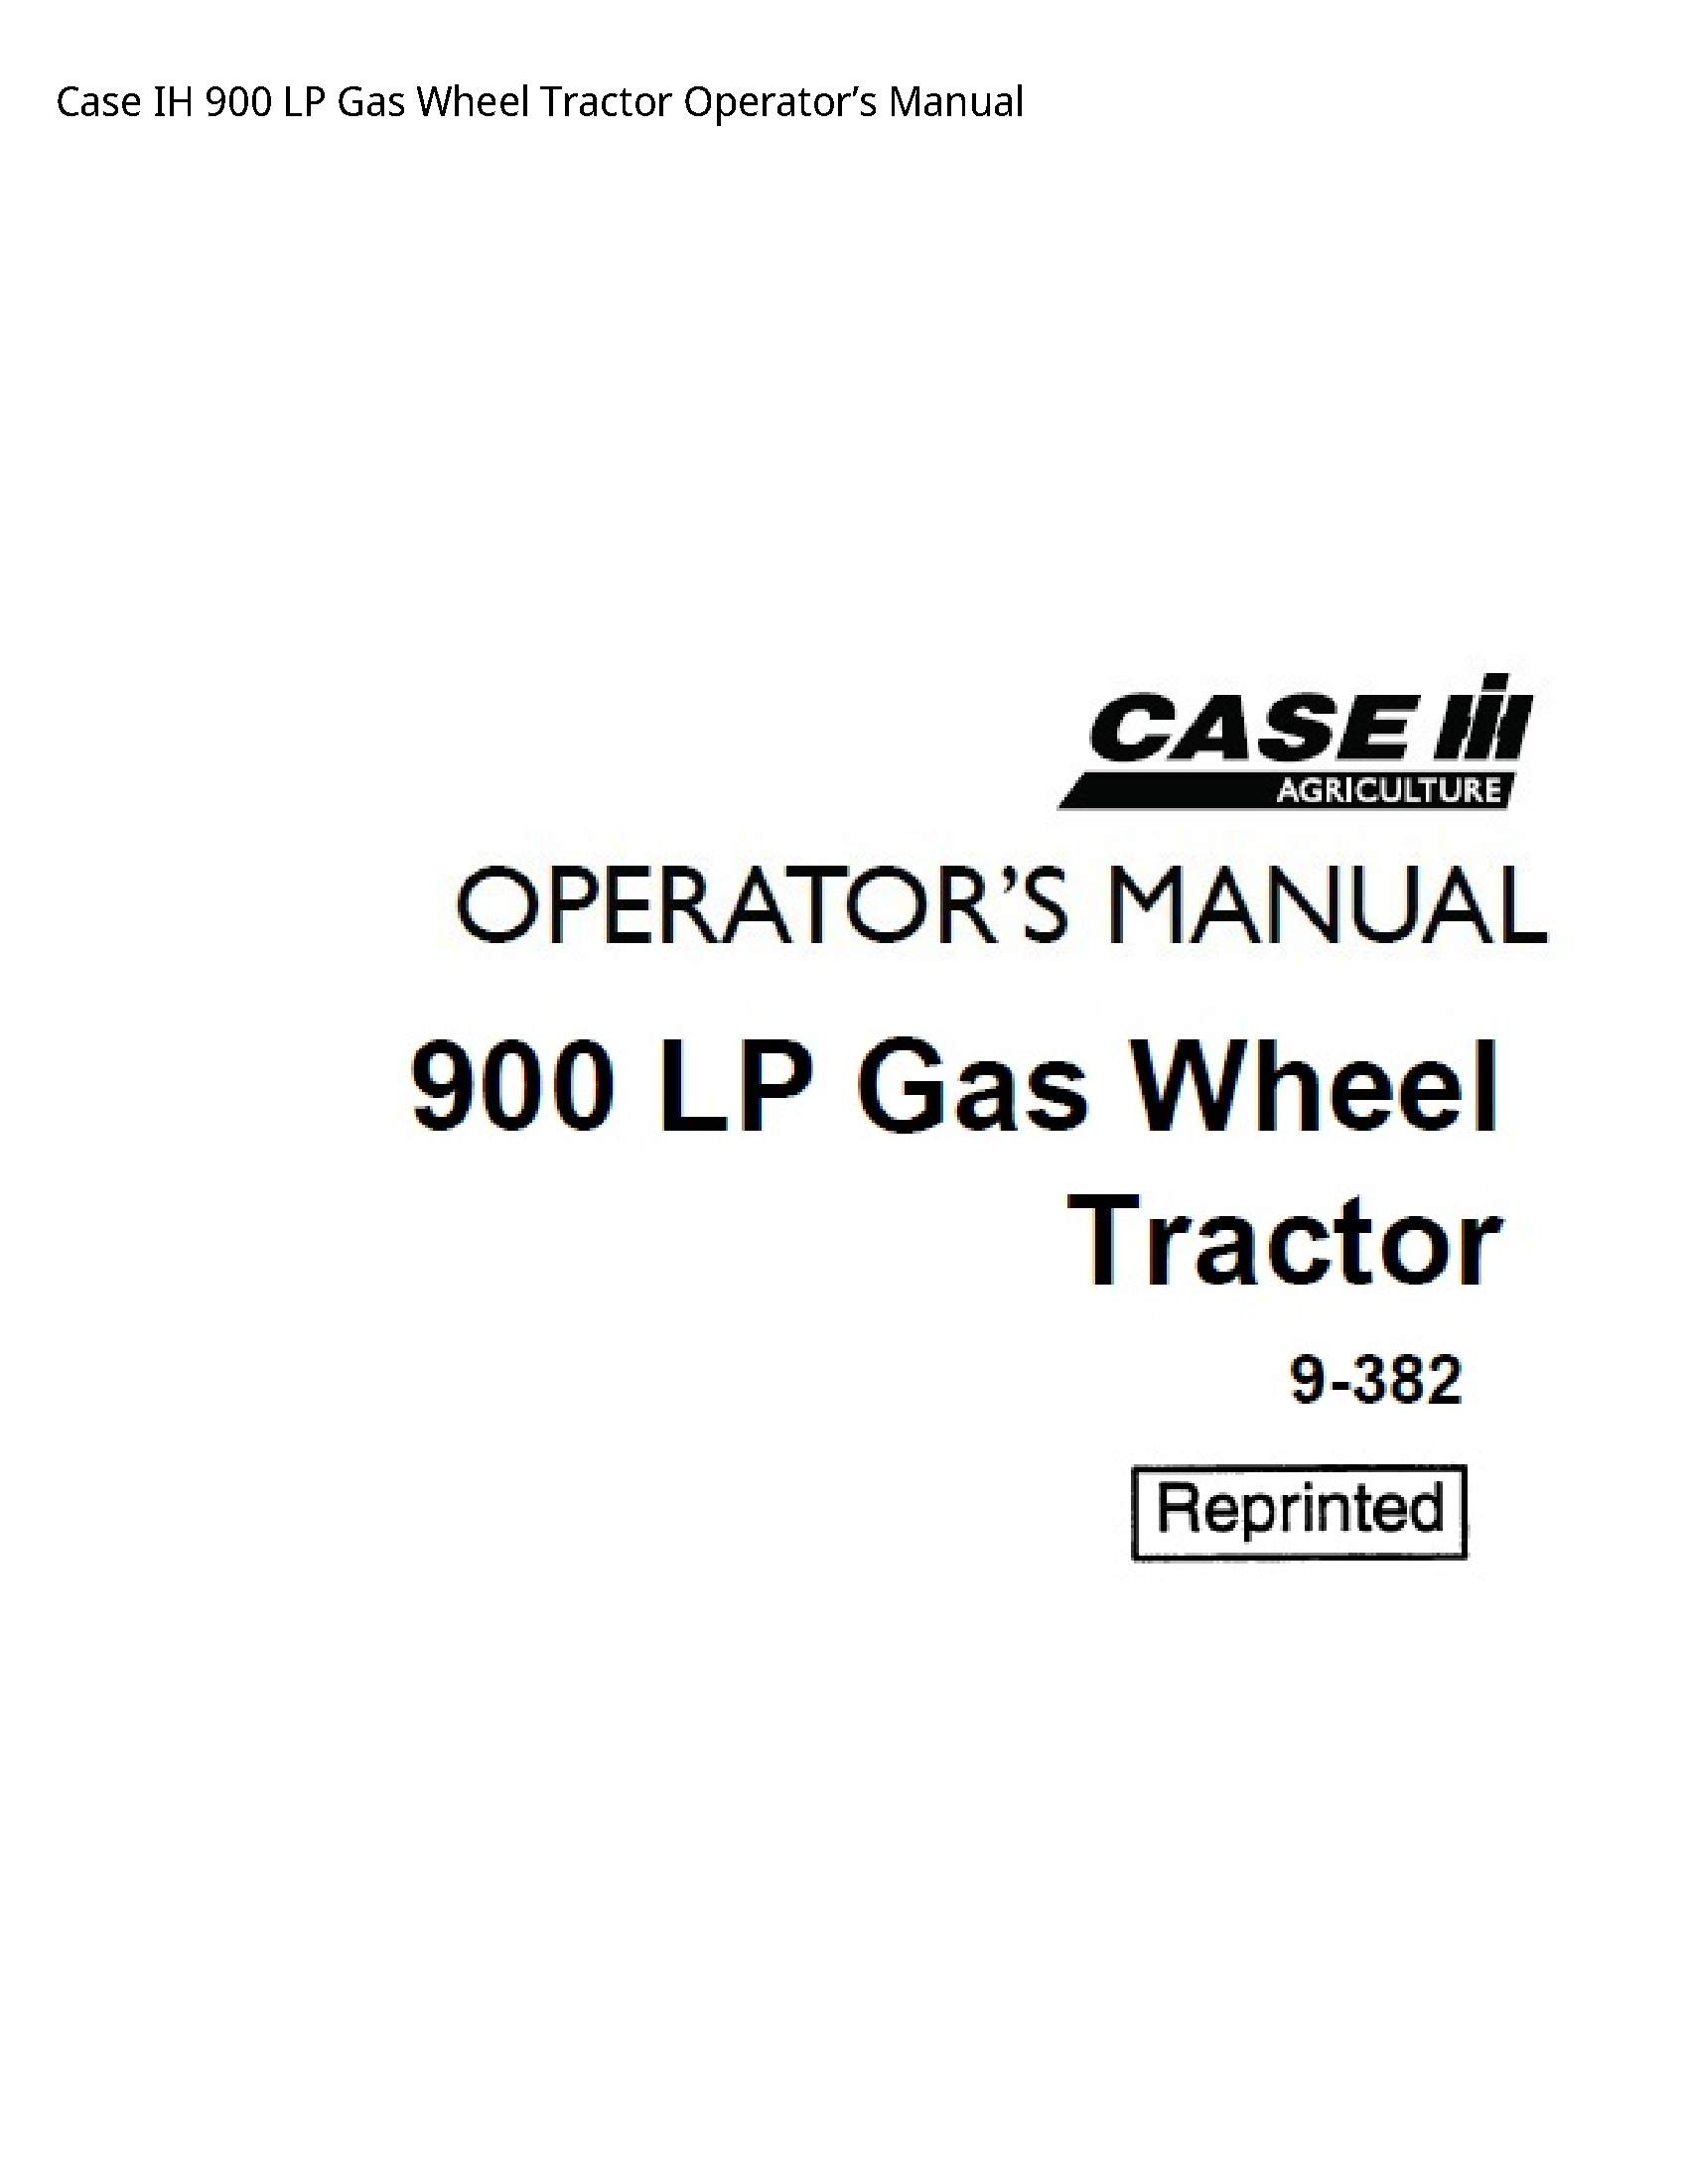 Case/Case IH 900 IH LP Gas Wheel Tractor Operator’s manual